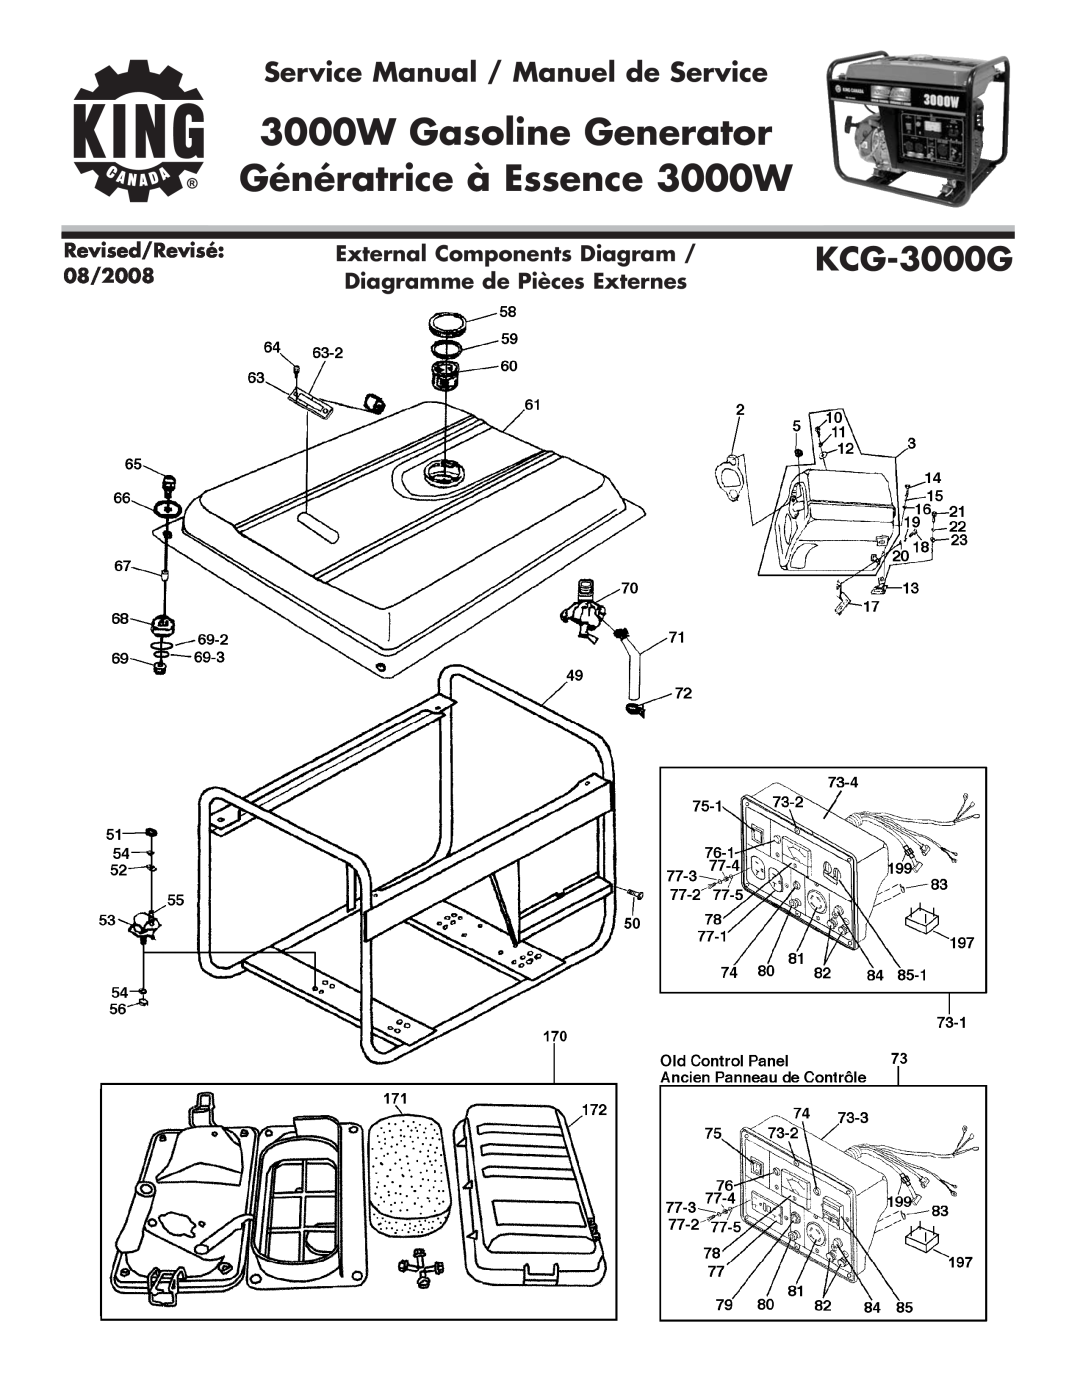 King Canada KCG-3000G service manual External Components Diagram, Diagramme de Pièces Externes, Revised/Revisé, 08/2008 